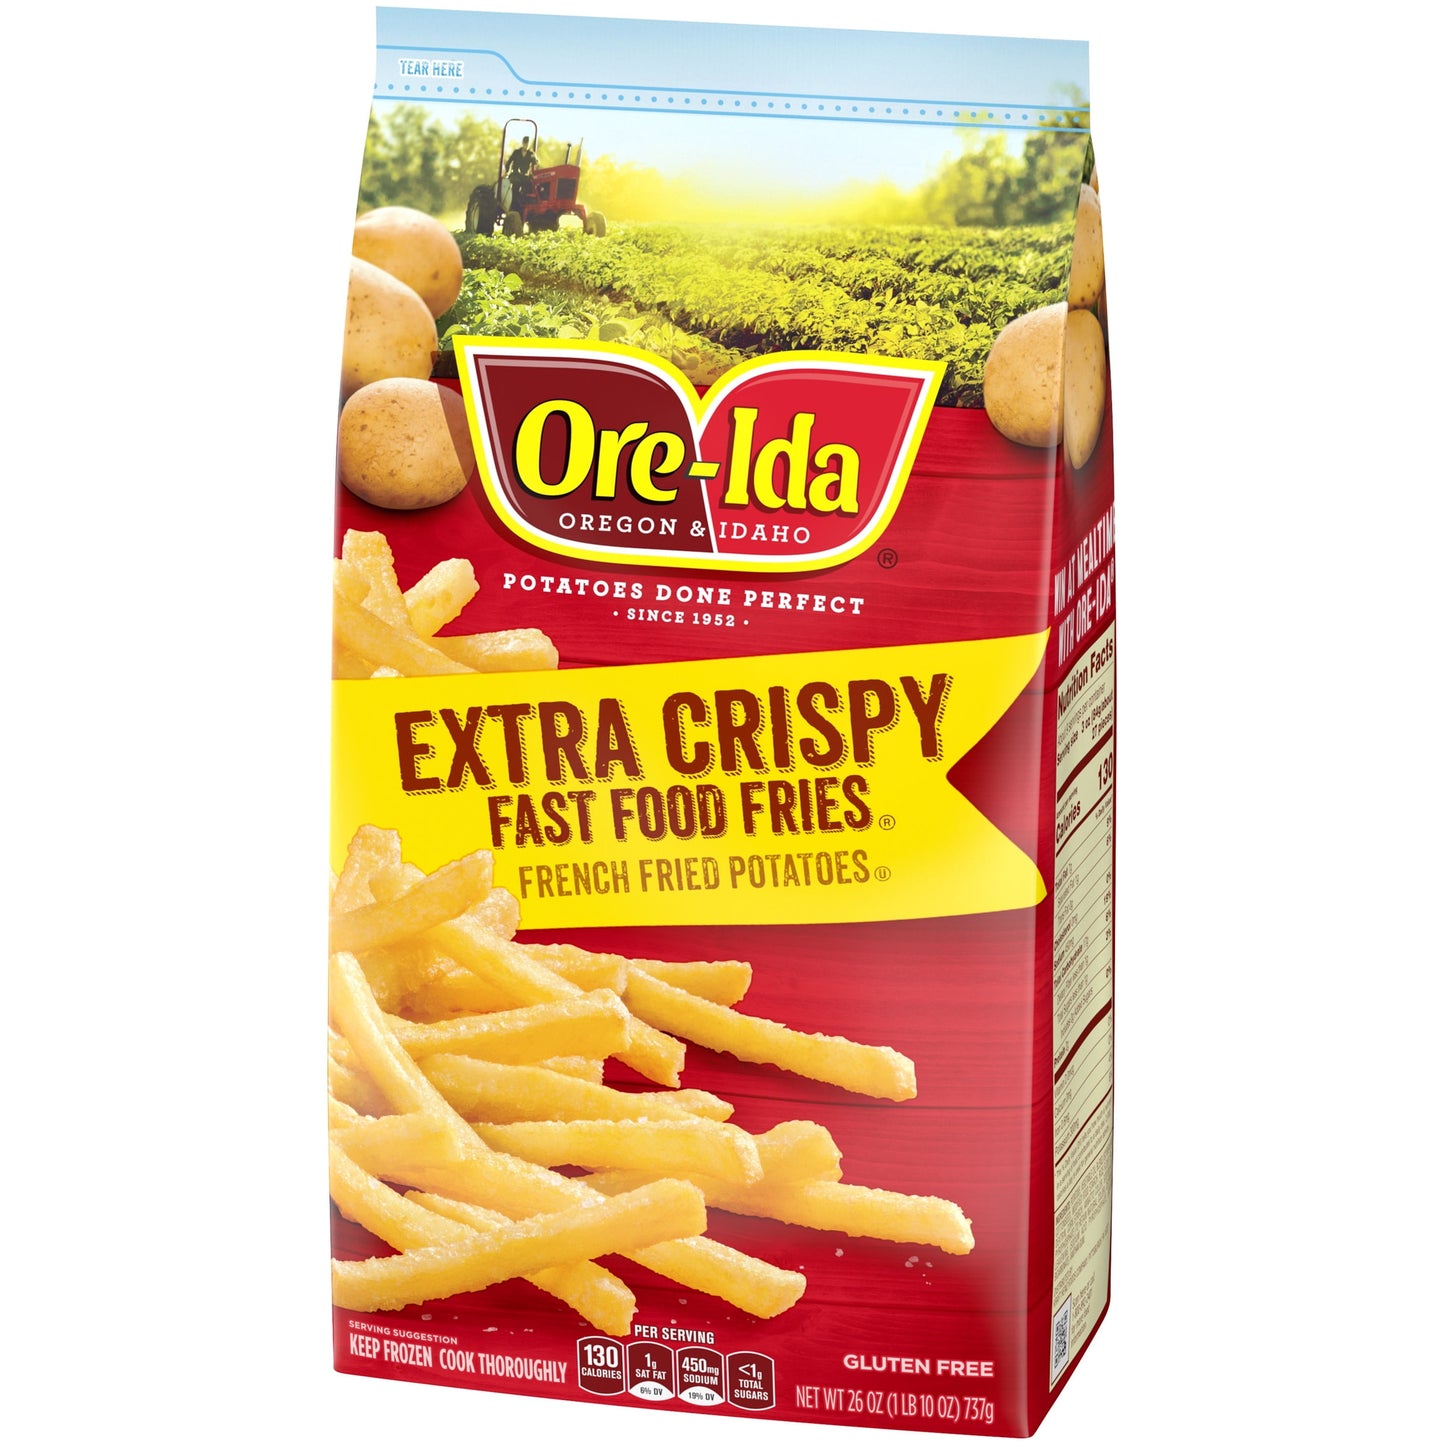 Ore-Ida Extra Crispy Fast Food Fries, French Fried Frozen Potatoes, 26 oz Bag